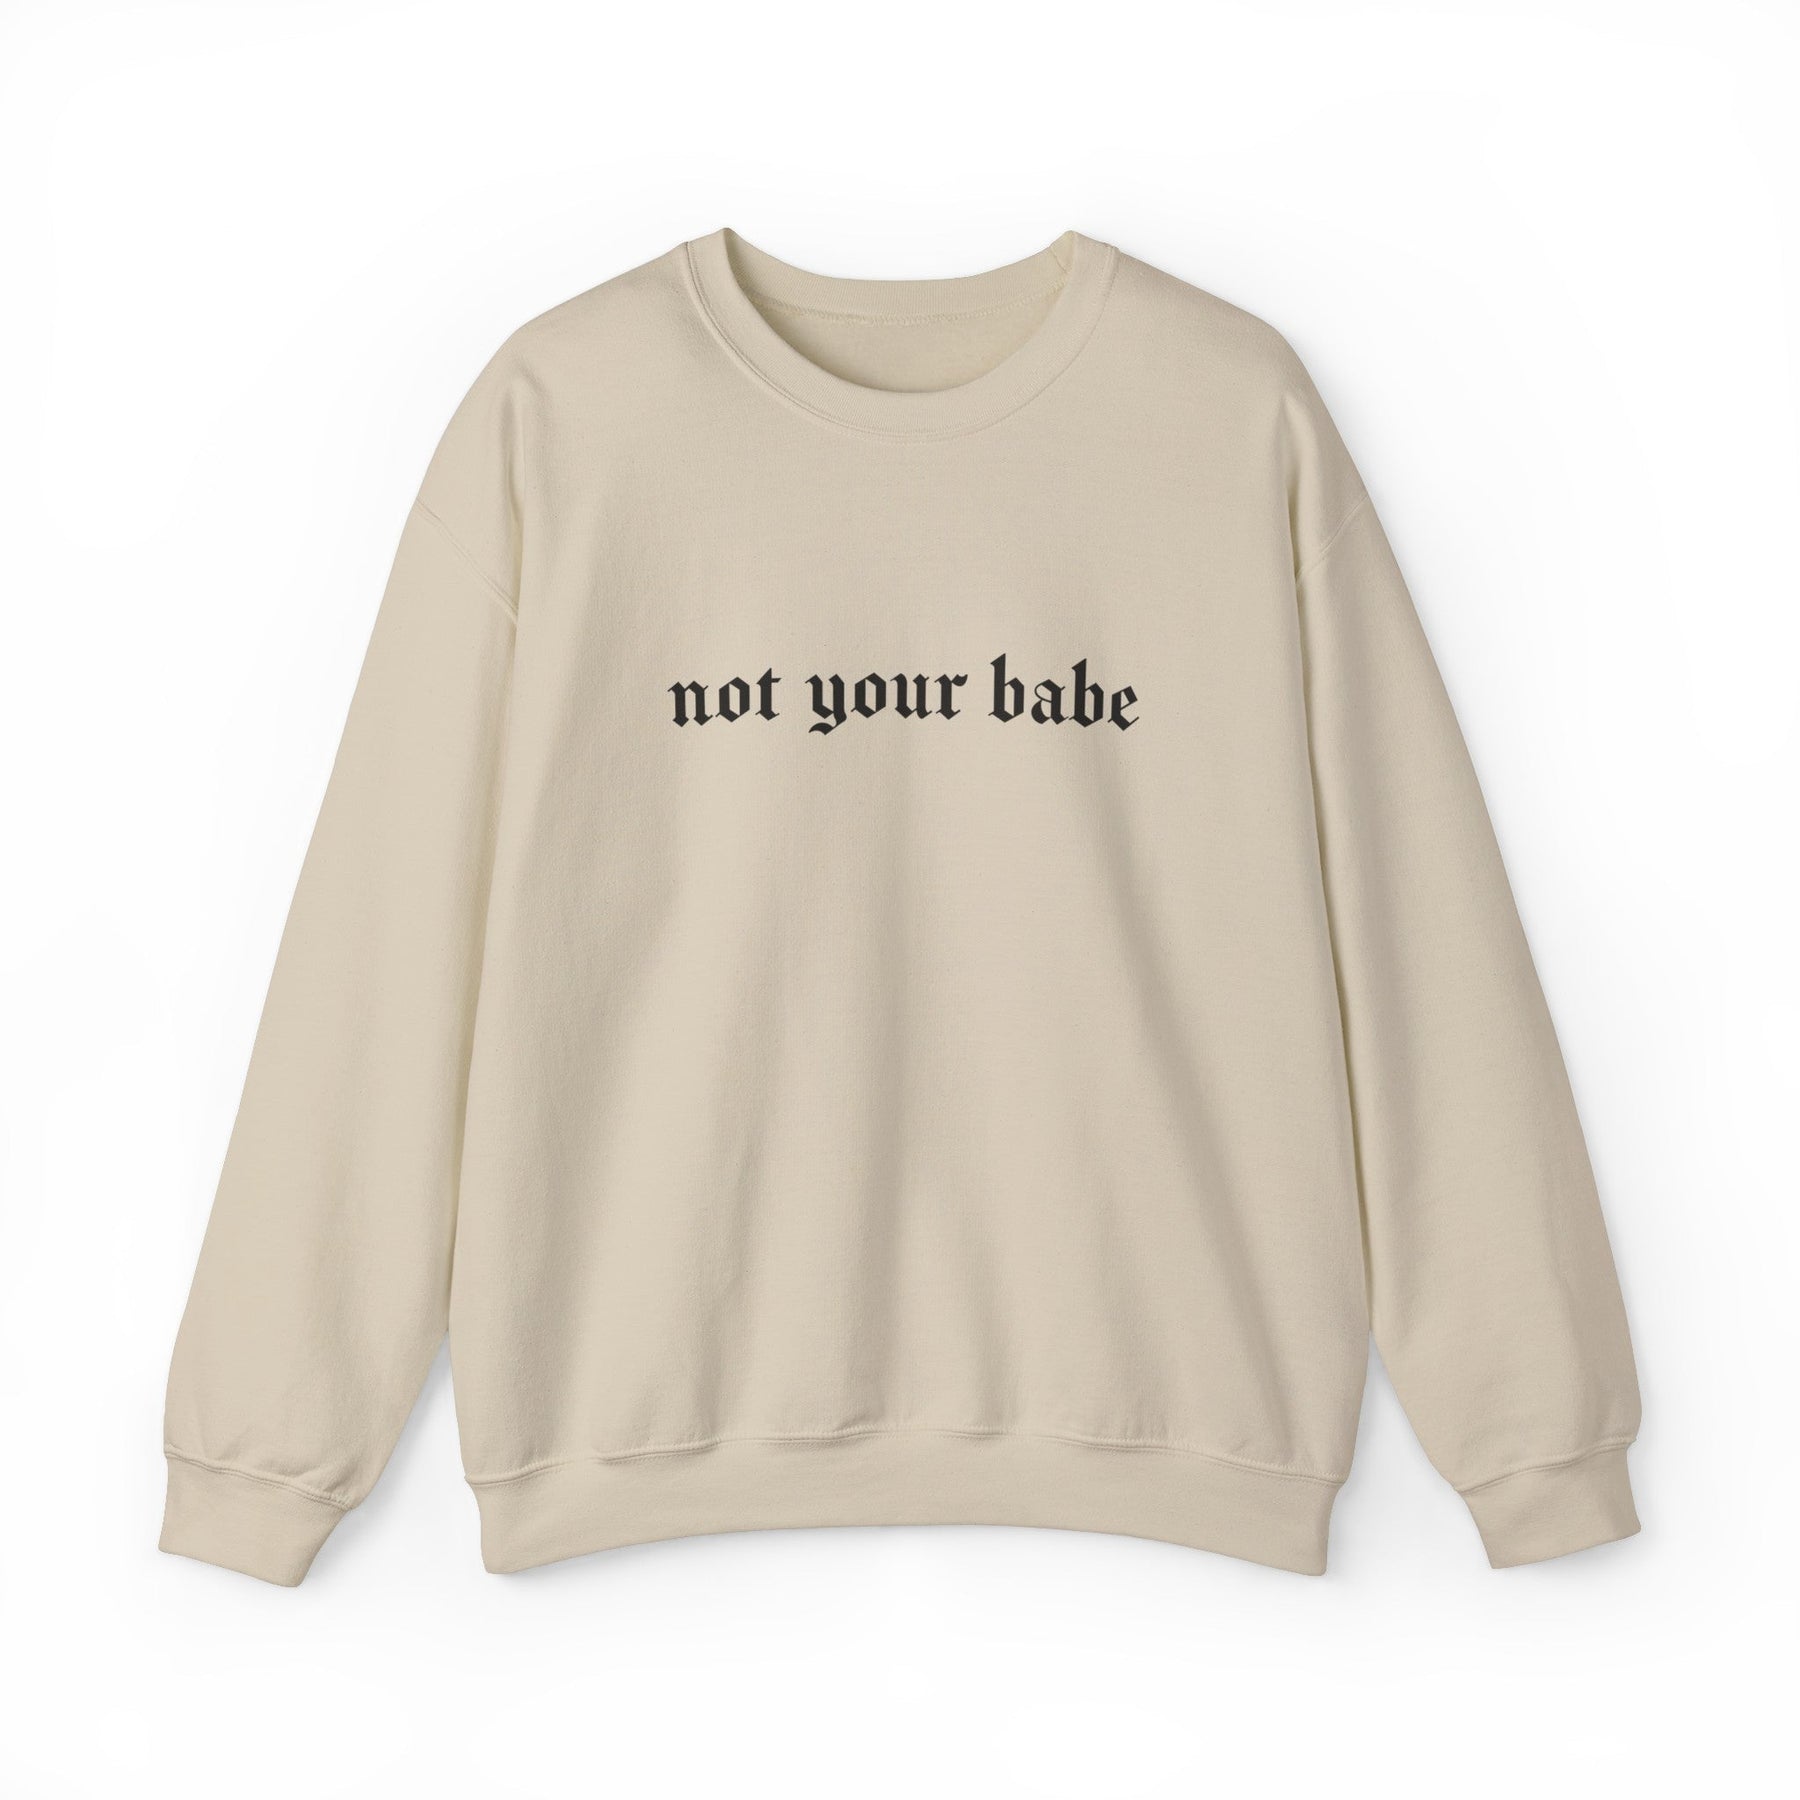 Not Your Babe Classic Goth Crew Neck Sweatshirt - Goth Cloth Co.Sweatshirt21017846594076091268